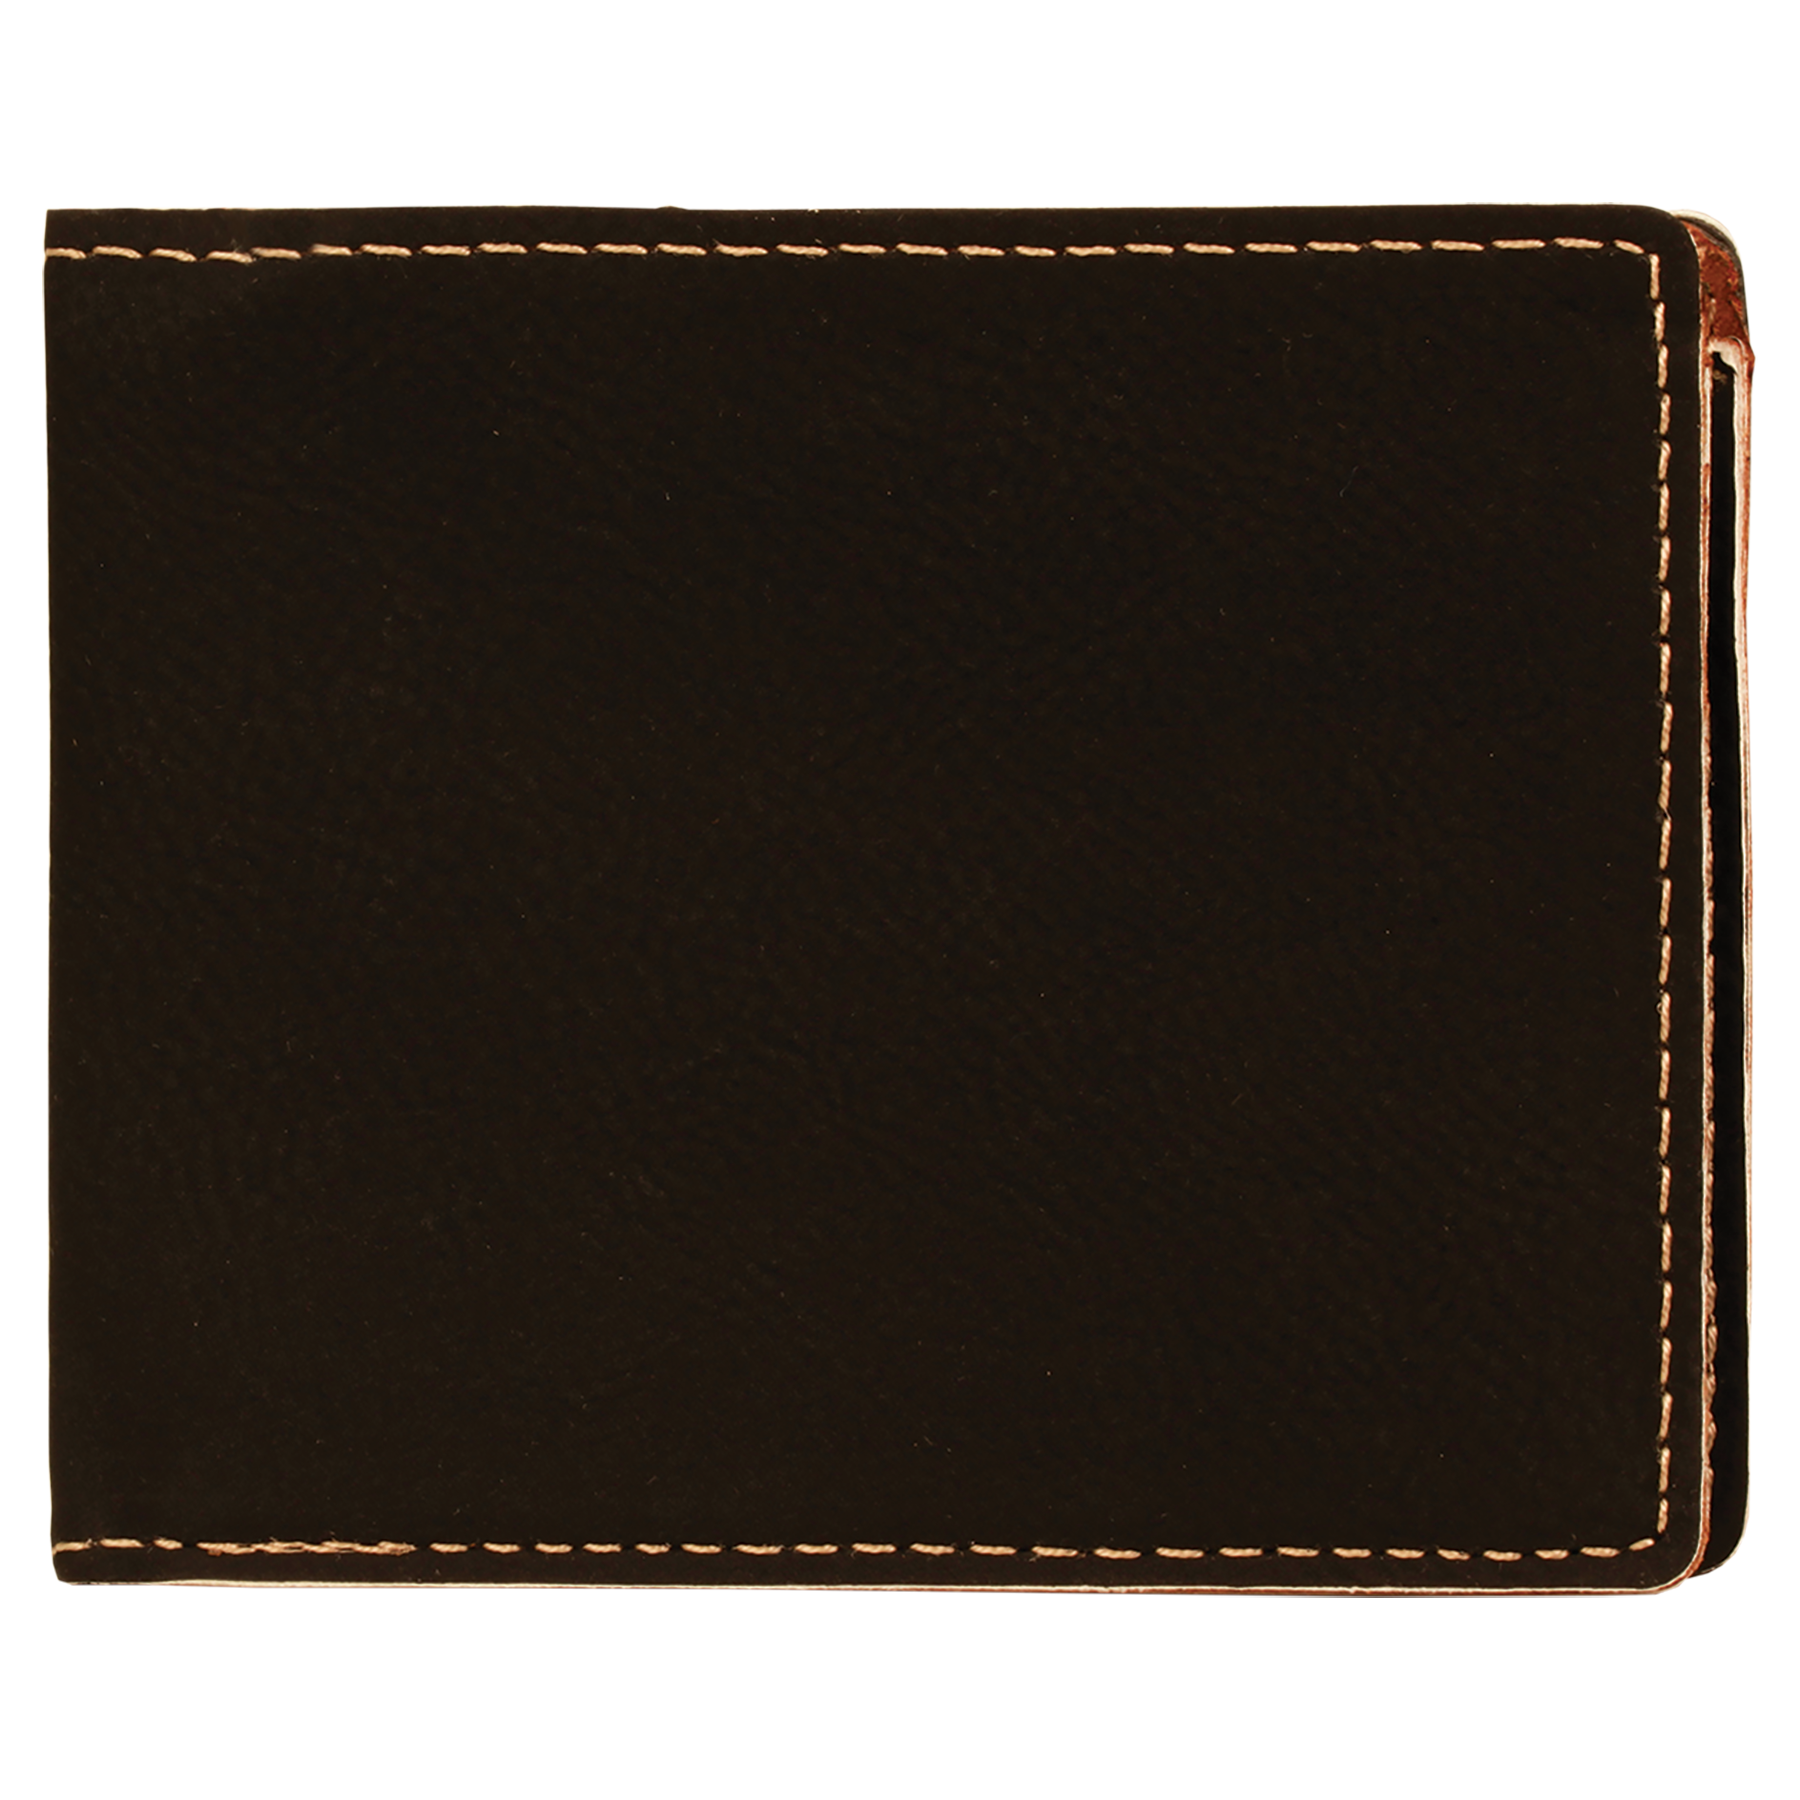 4 1/2" x 3 1/2" Laserable Leatherette Bifold Wallet